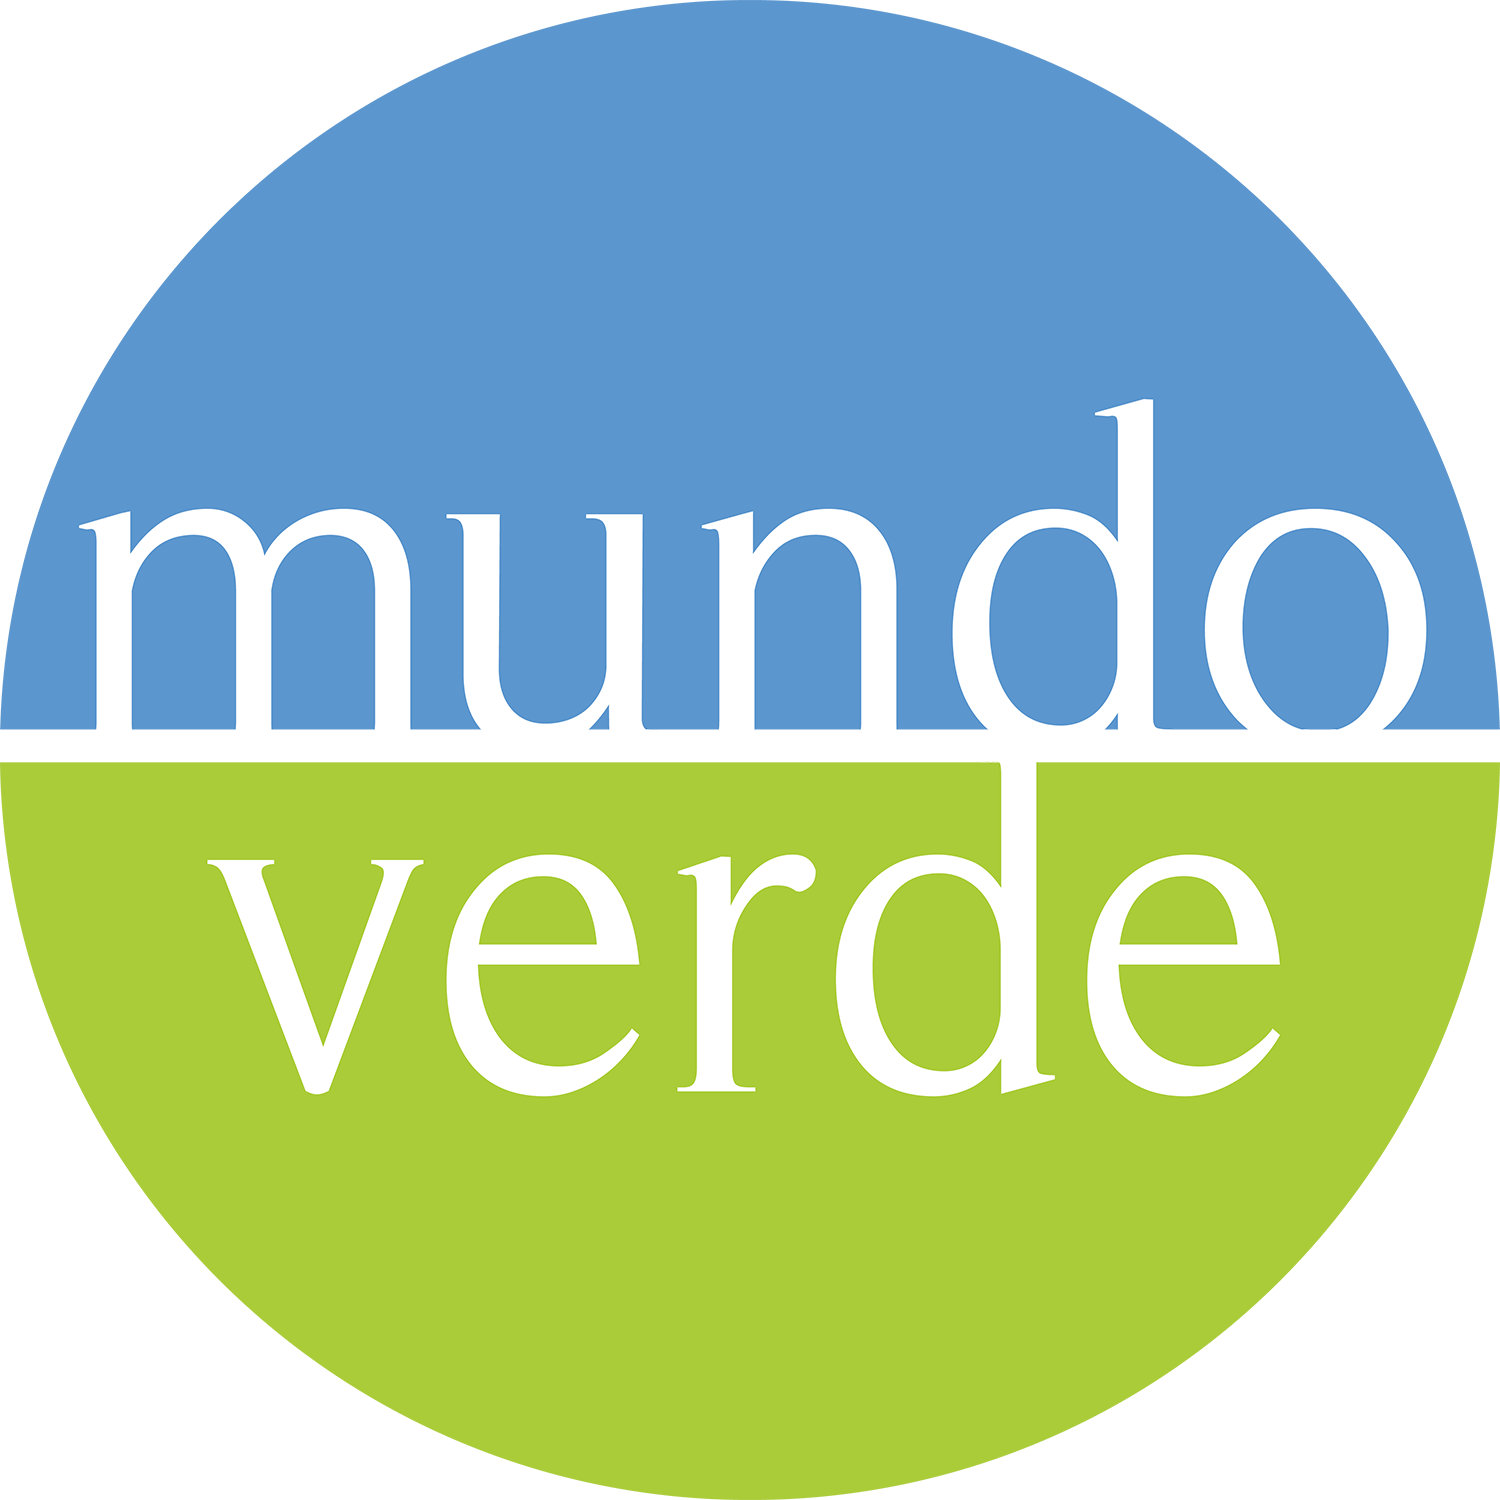 Mundo Verde Logo Solid Circle 4x4 (transparent background)) (1) - Carissa Tirado Marks.png